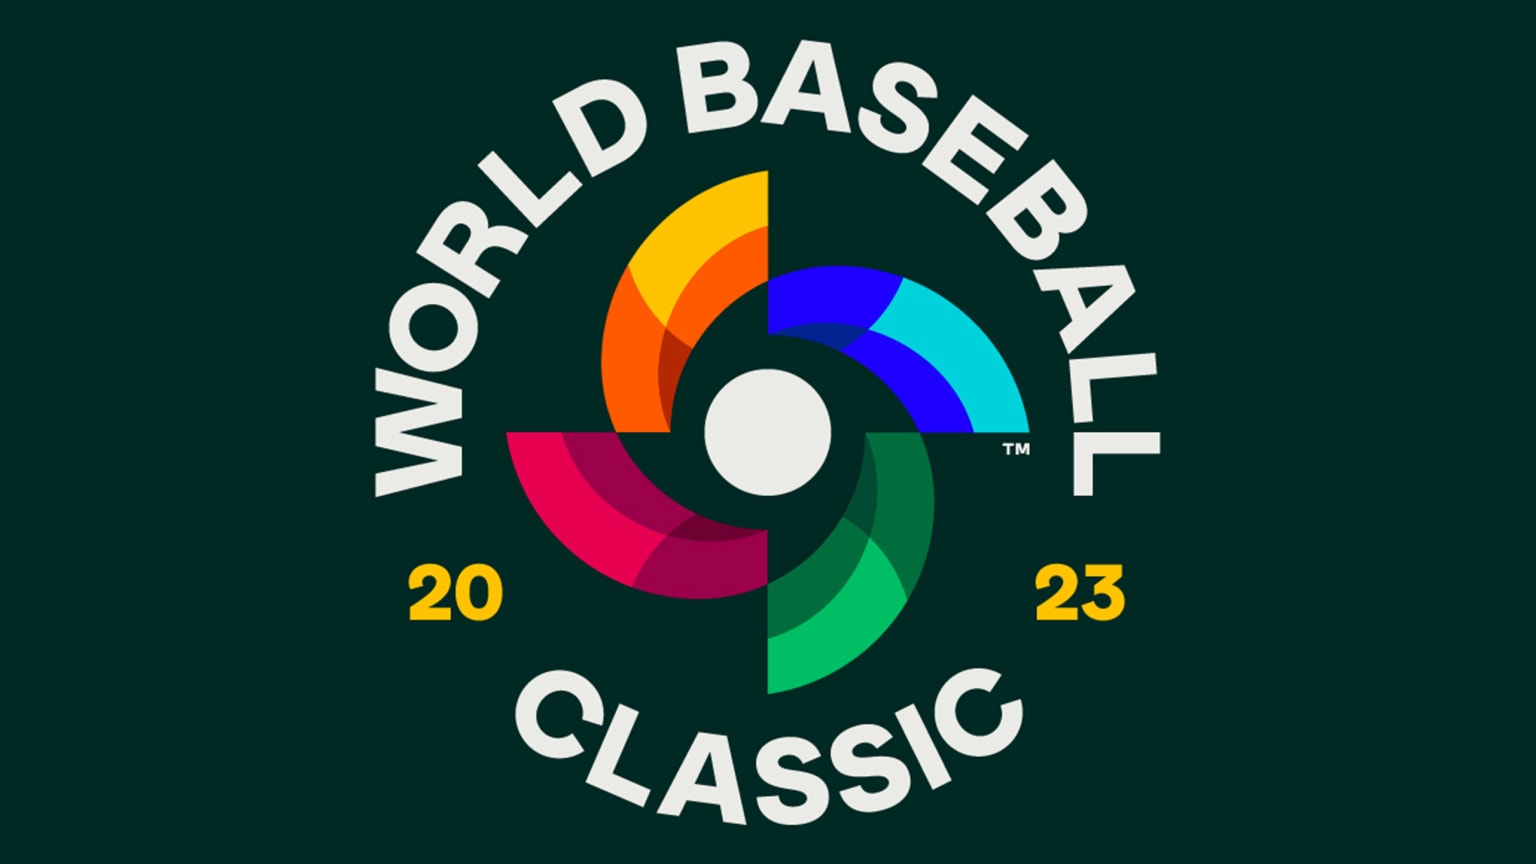 World Baseball Classic 2023